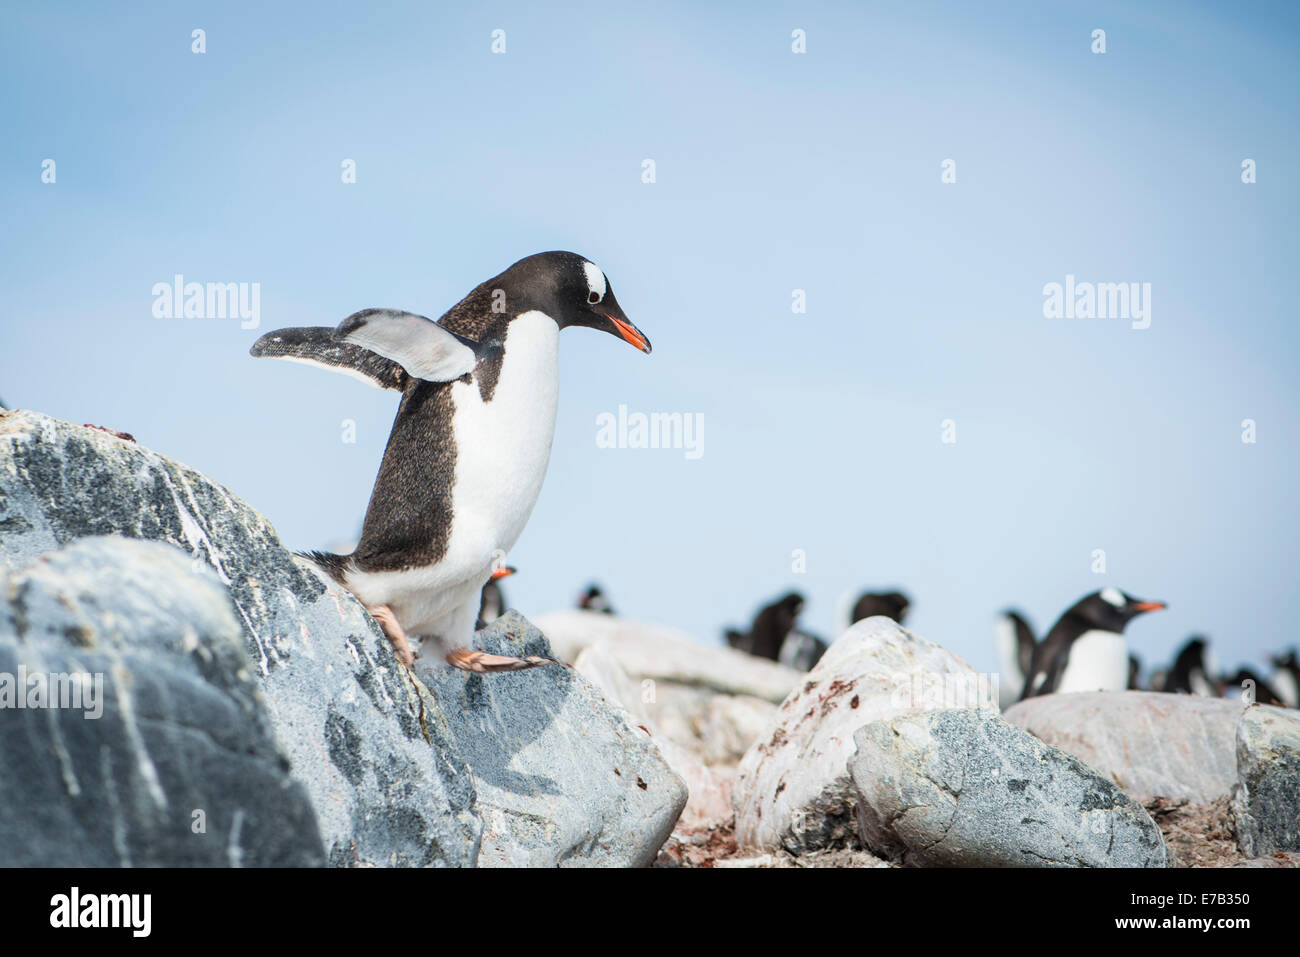 Pinguino Gentoo rockhopping, Antartide Foto Stock